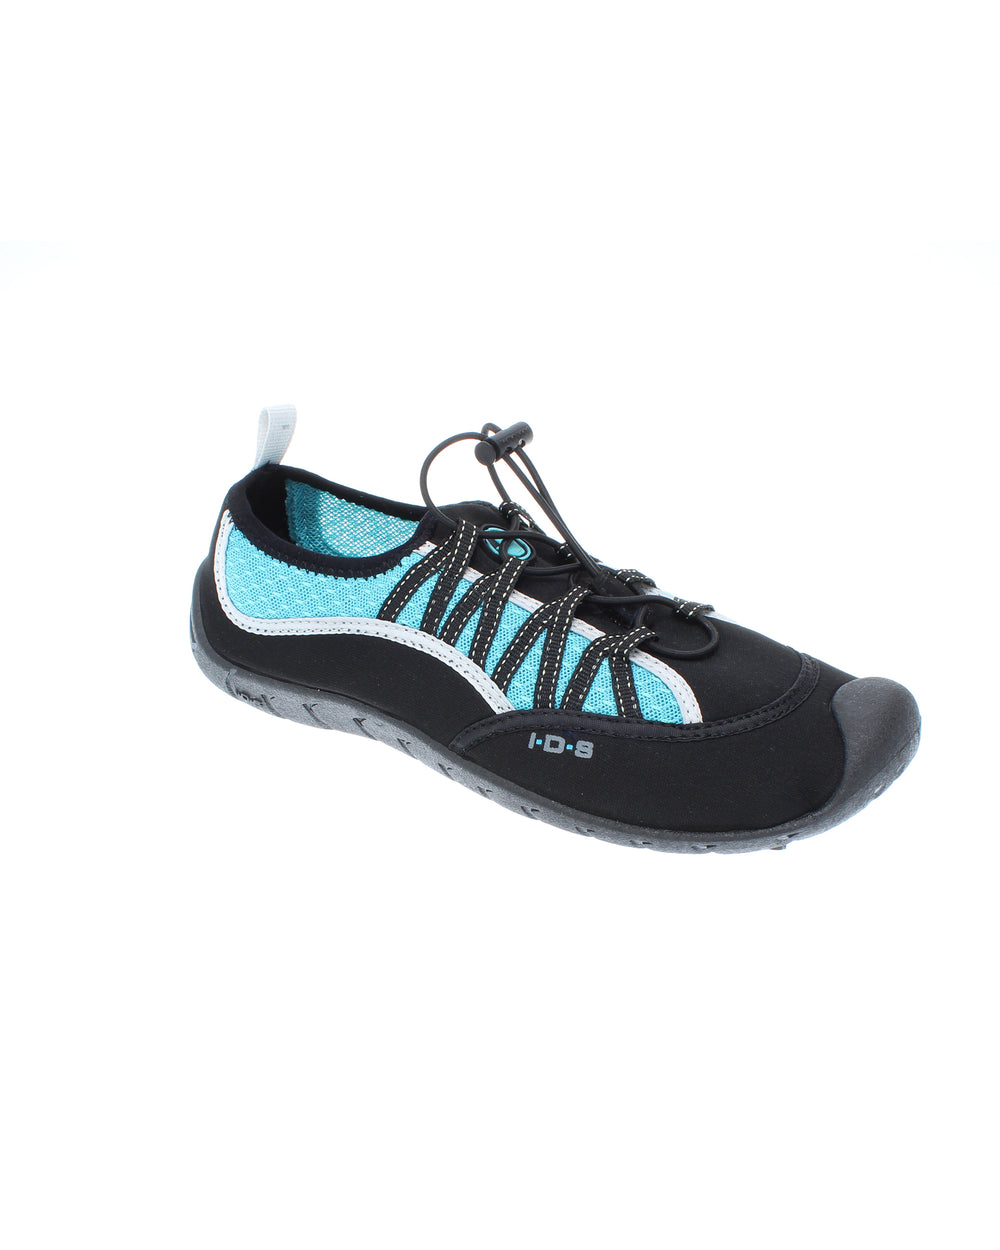 Women's Sidewinder Water Shoes - Black/Oasis Blue